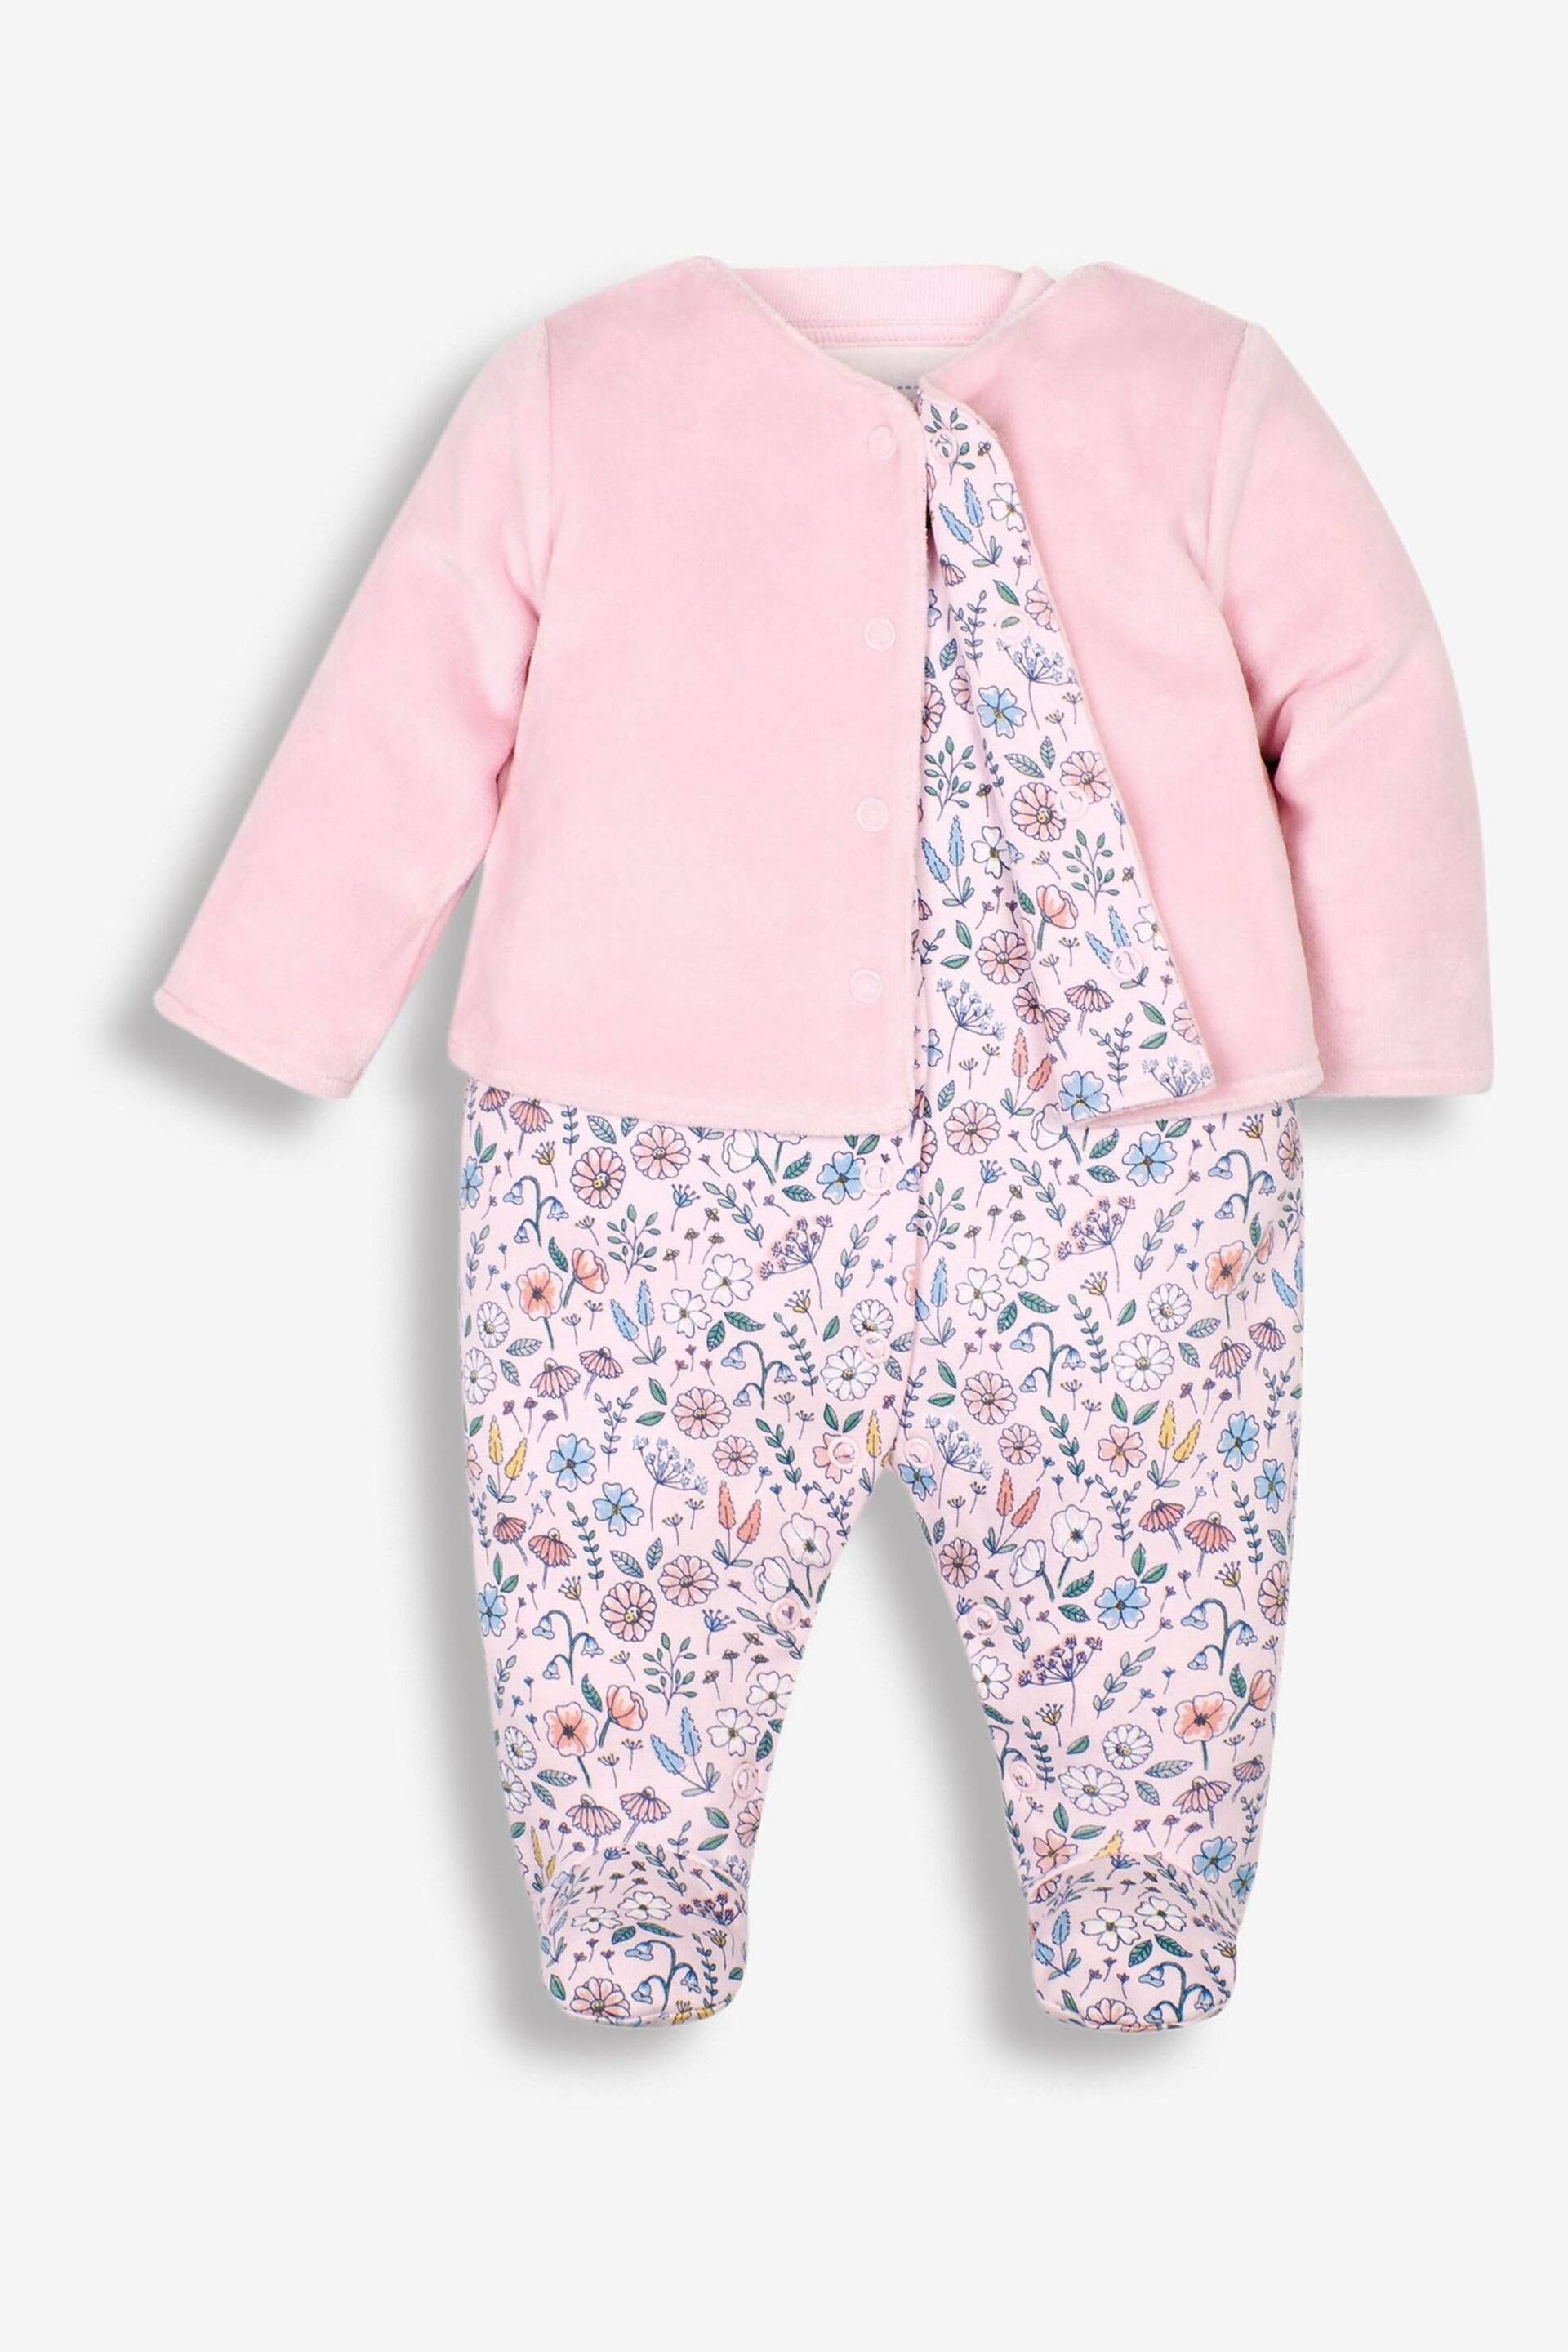 JoJo Maman Bébé Pink Floral 2-Piece Baby Sleepsuit & Velour Jacket Set - Image 5 of 9